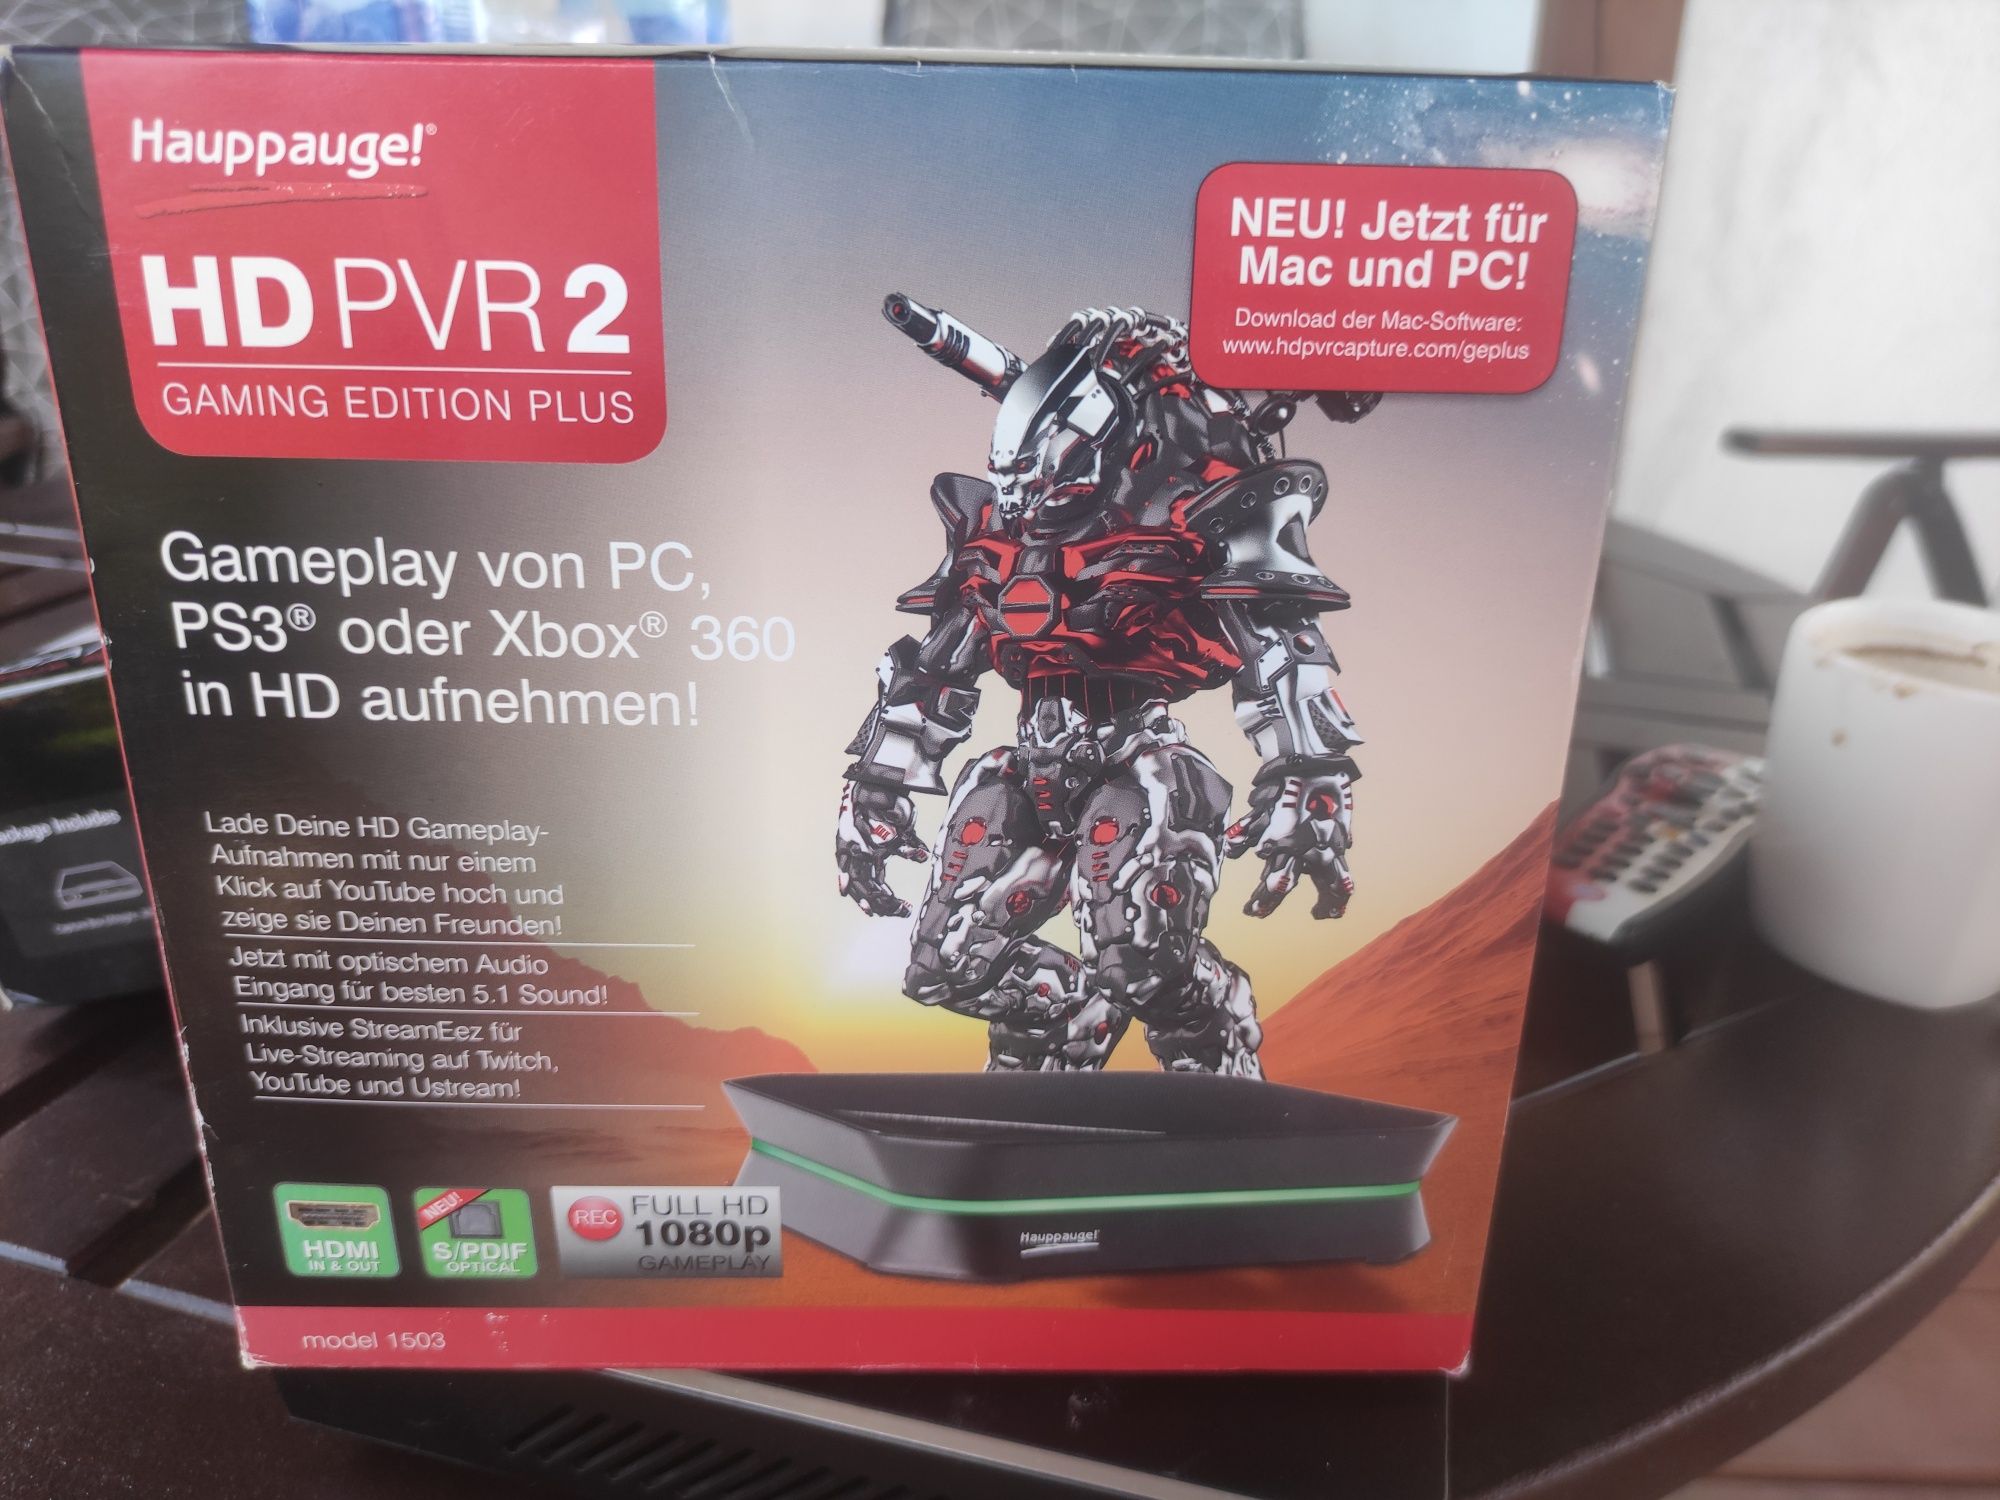 HD PVR 2 gaming edition Plus